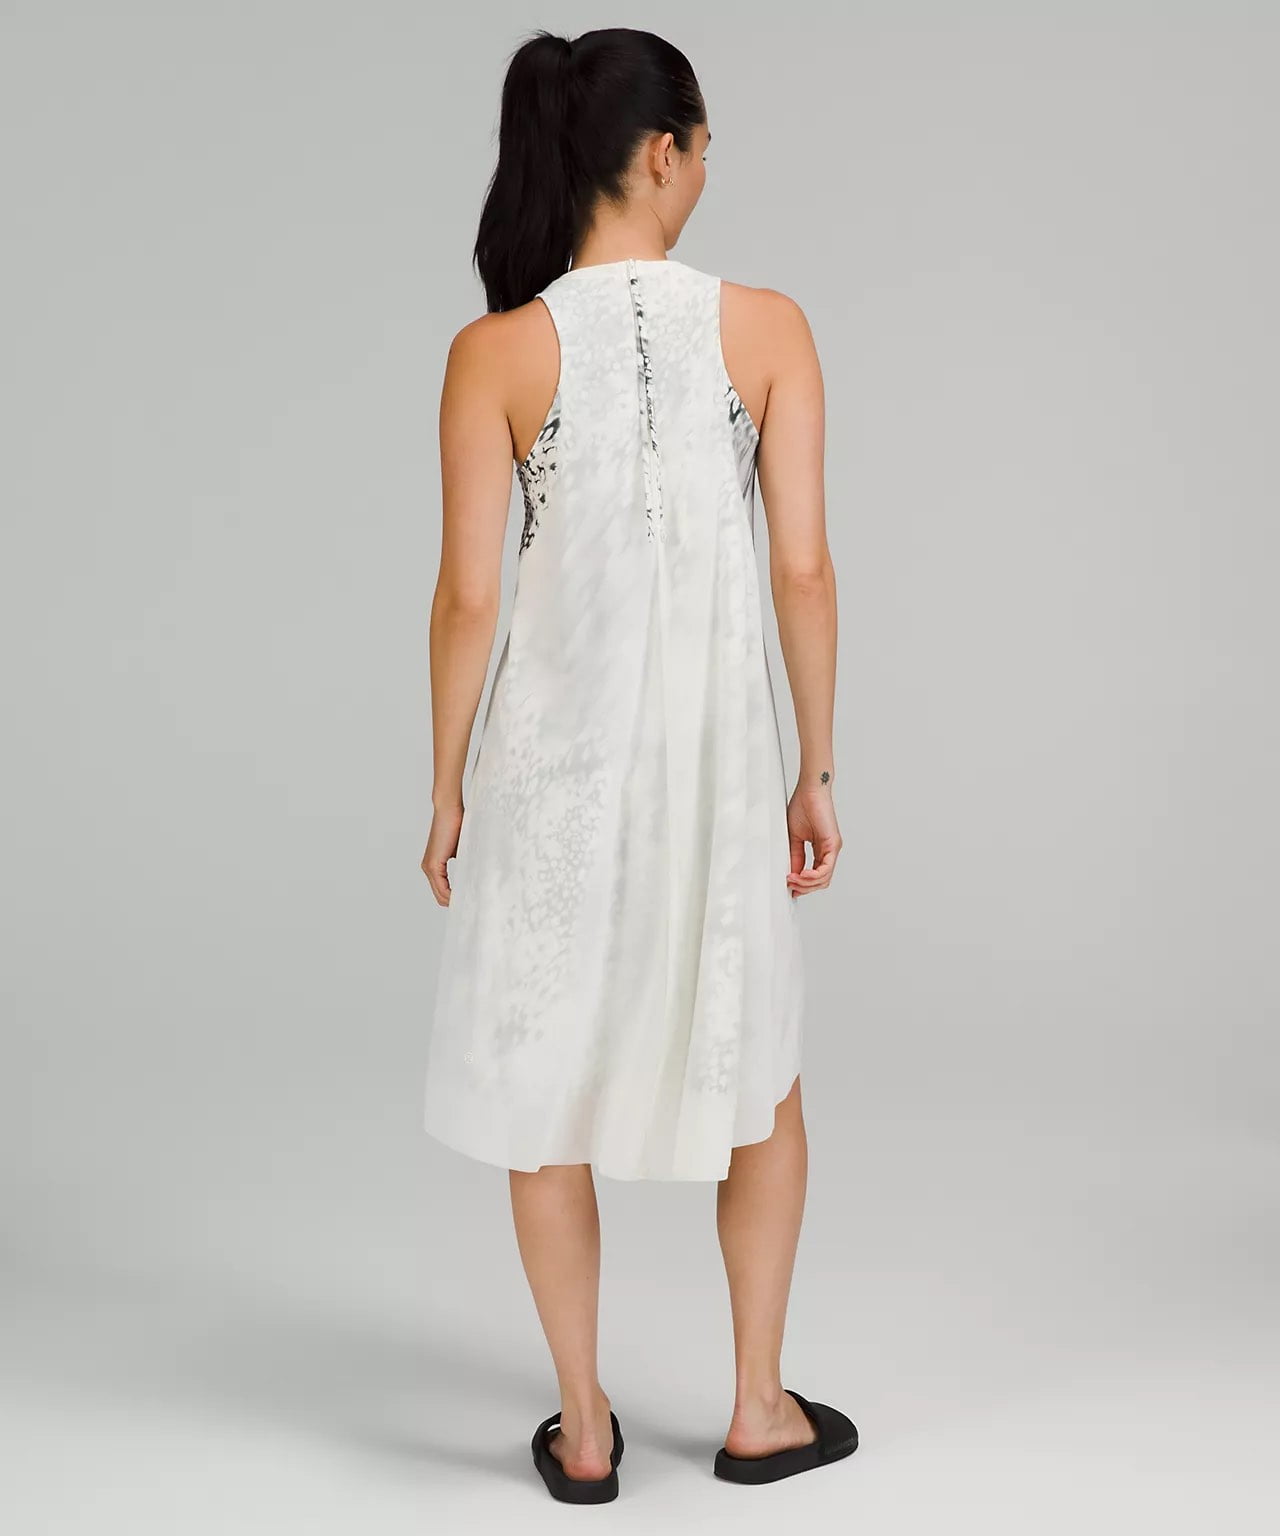 lululemon dress - Mesh Overlay High-Neck Dress 2